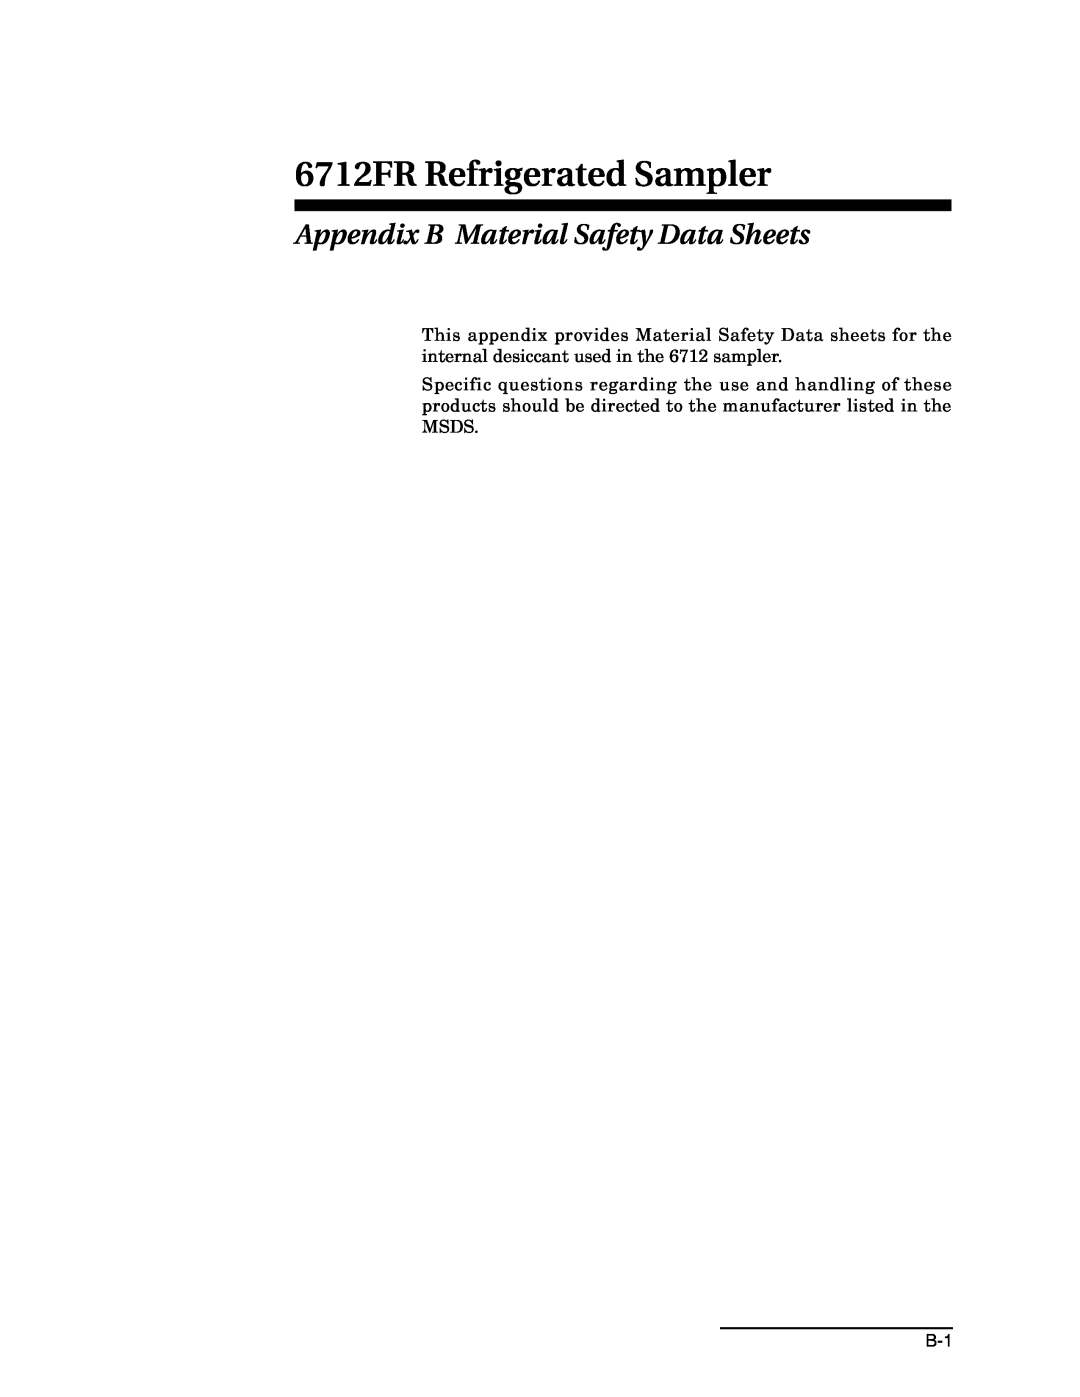 Teledyne manual Appendix B Material Safety Data Sheets, 6712FR Refrigerated Sampler 